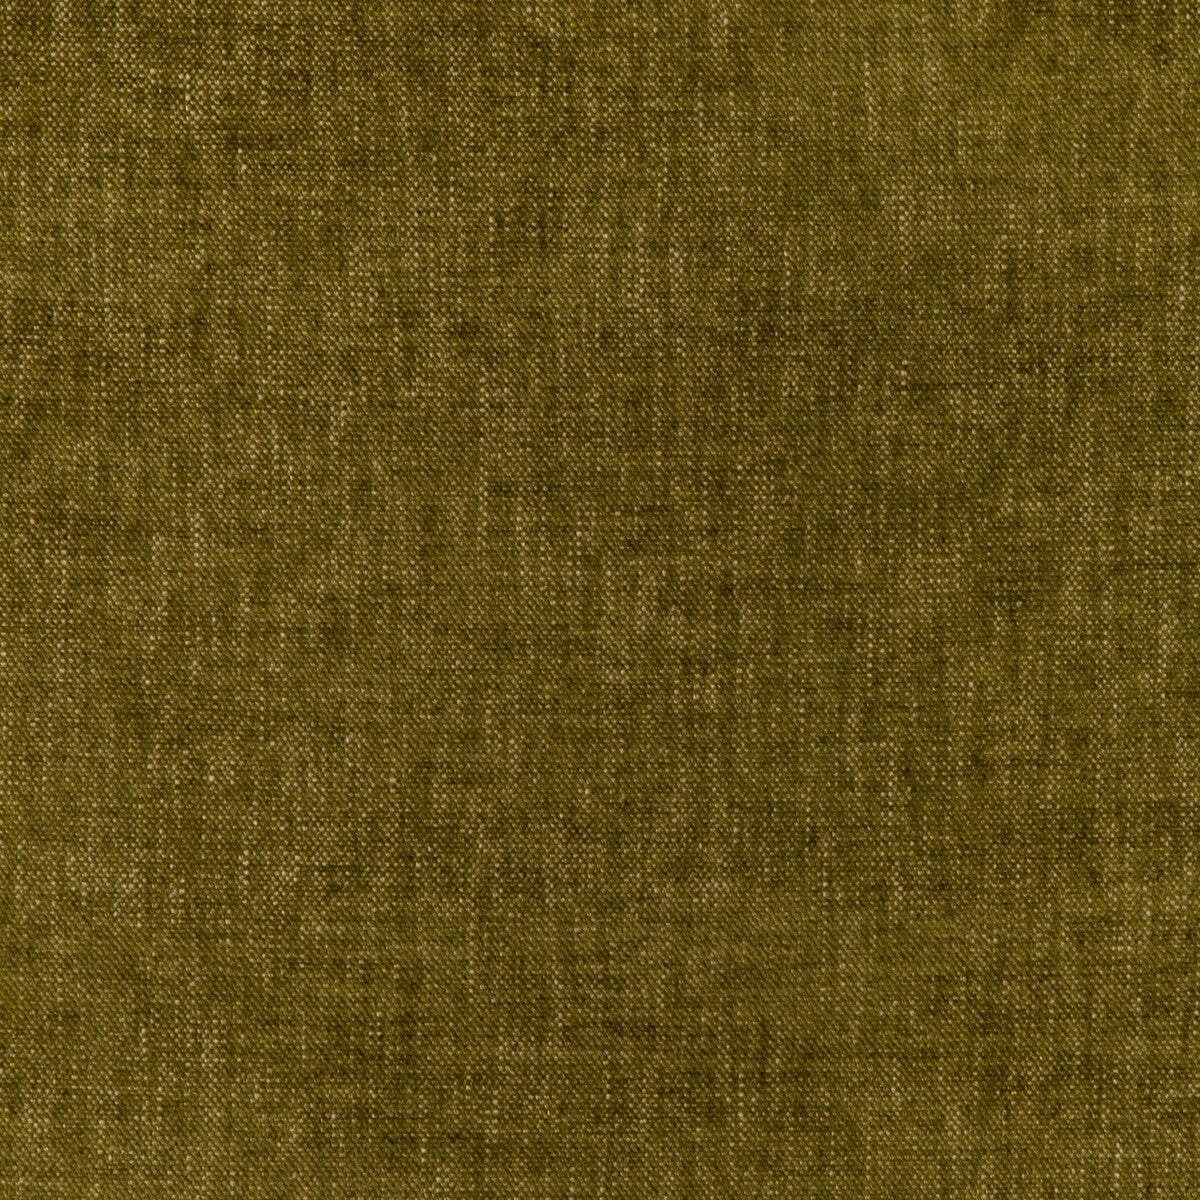 Kravet Smart fabric in 36663-323 color - pattern 36663.323.0 - by Kravet Smart in the Performance Kravetarmor collection